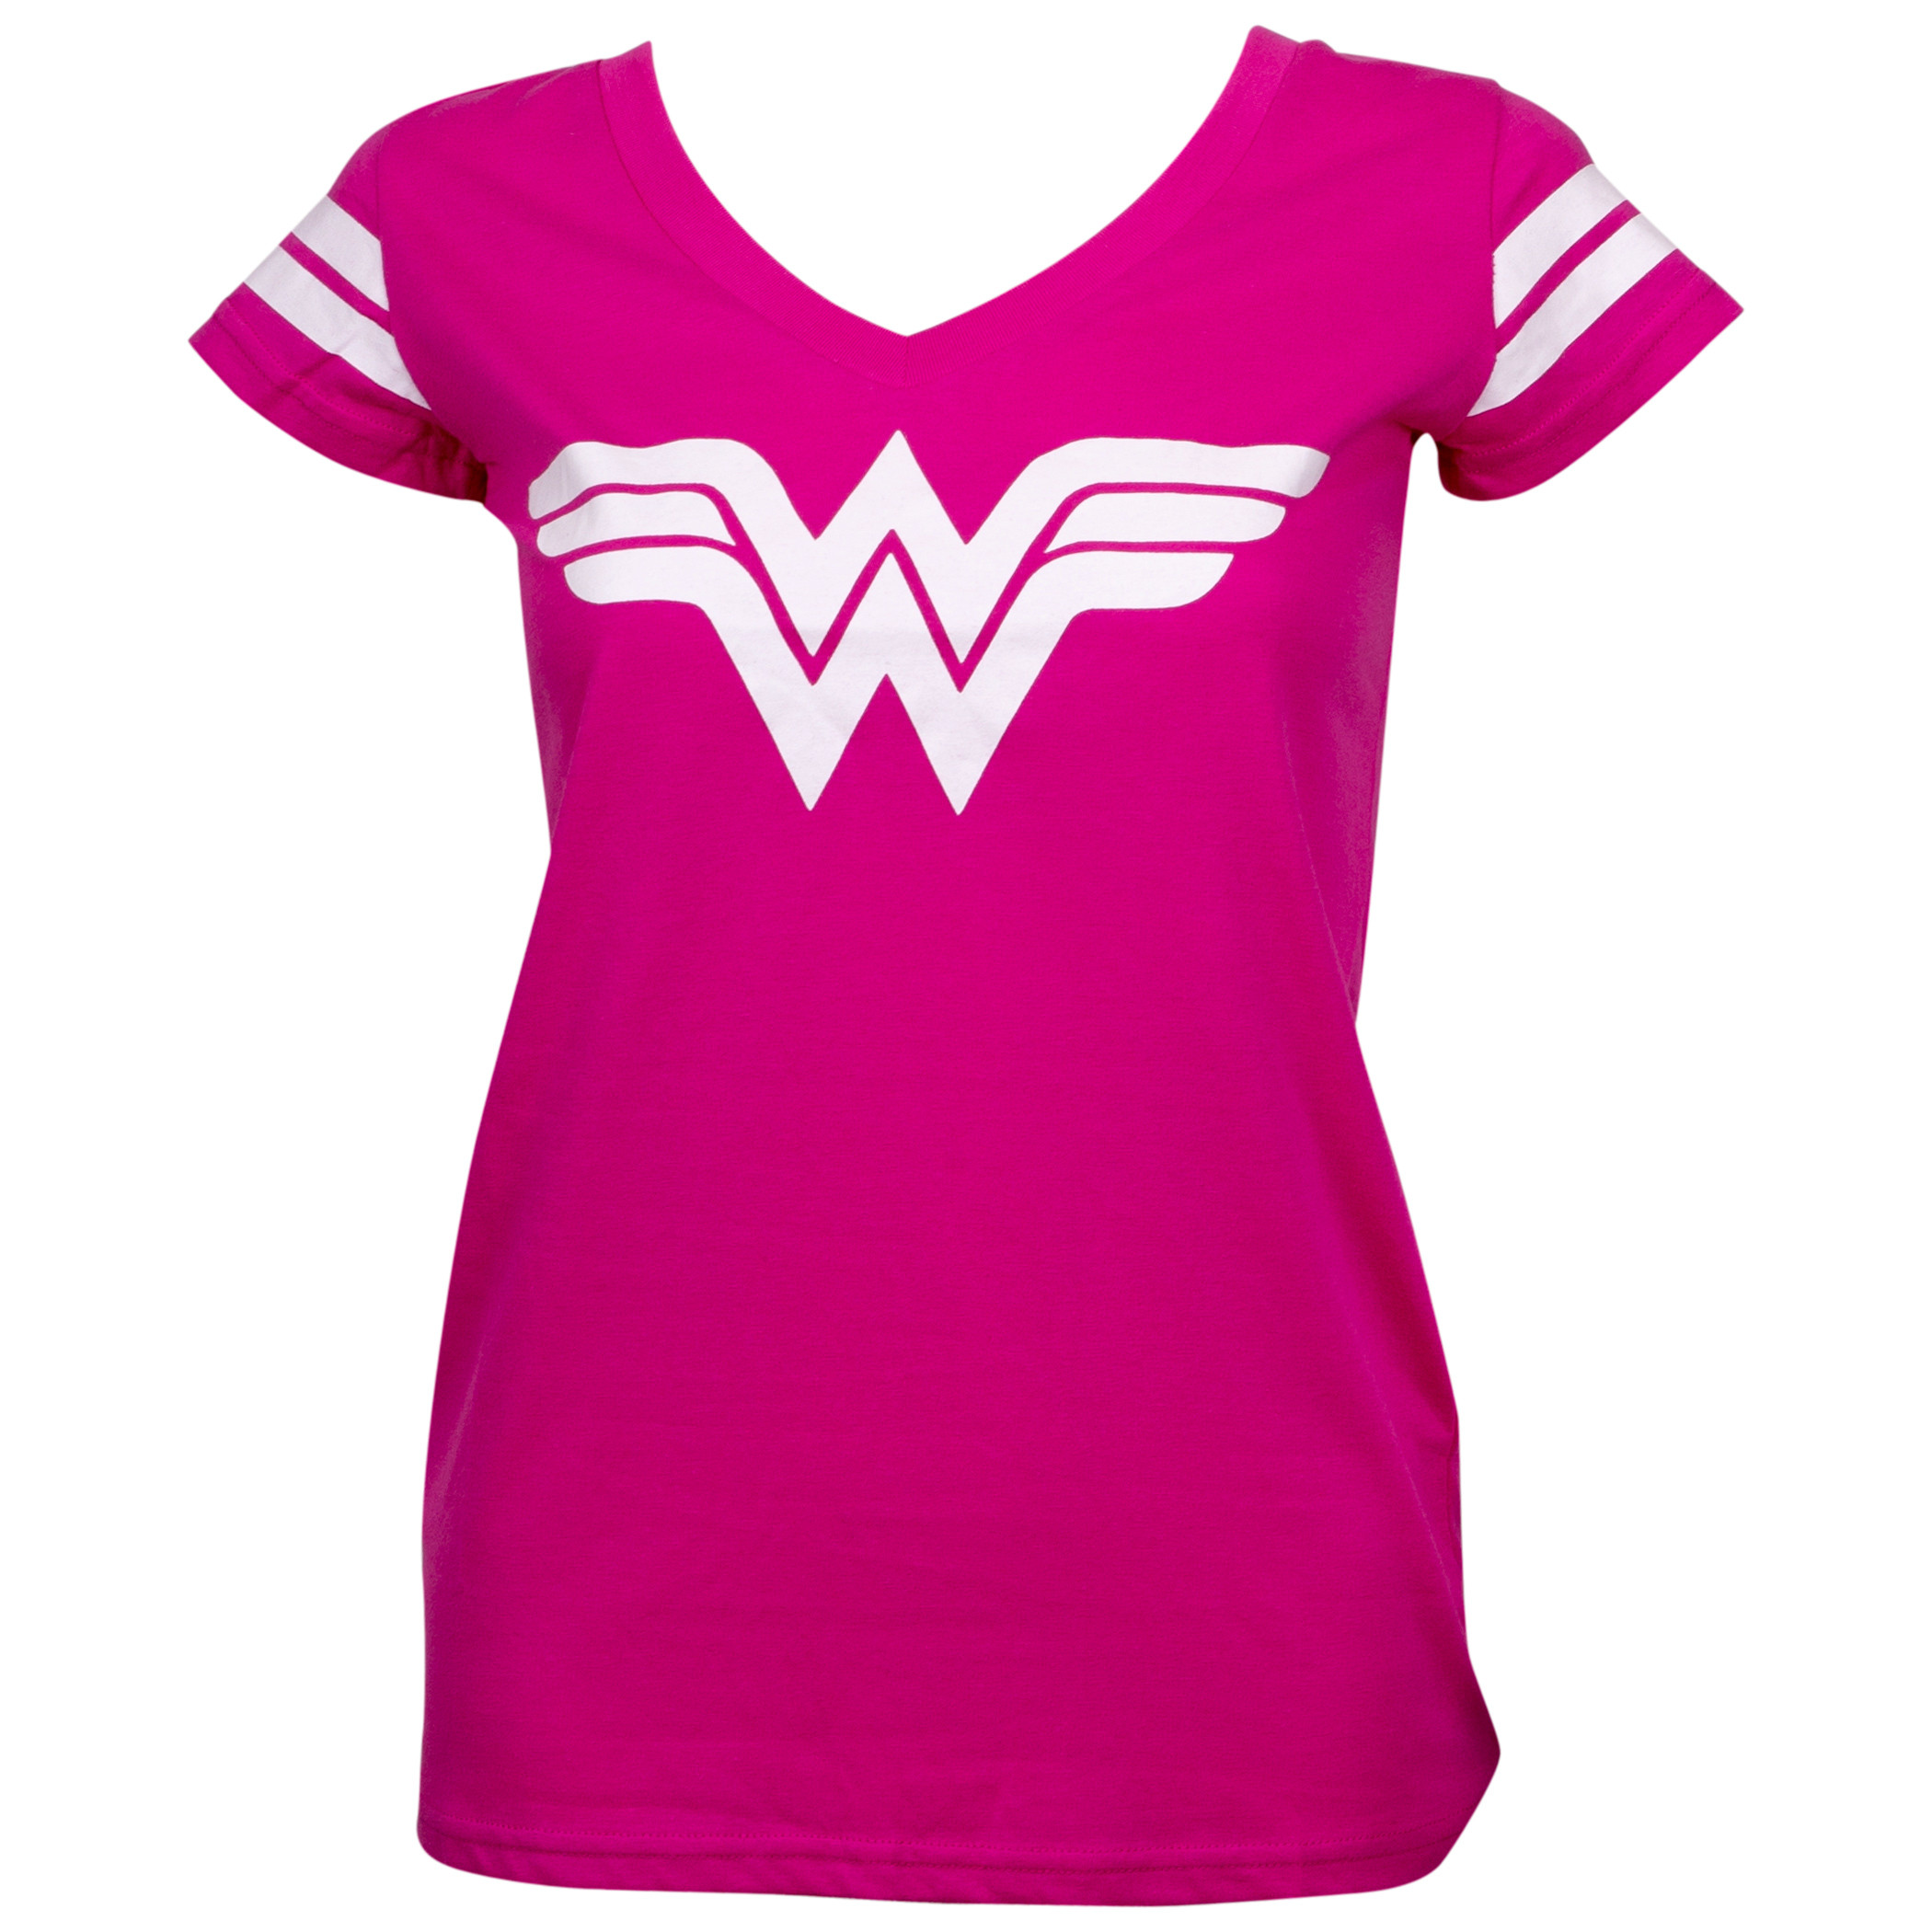 Wonder Woman Logo Hot Pink V-Neck T-Shirt with Sleeve Stripes